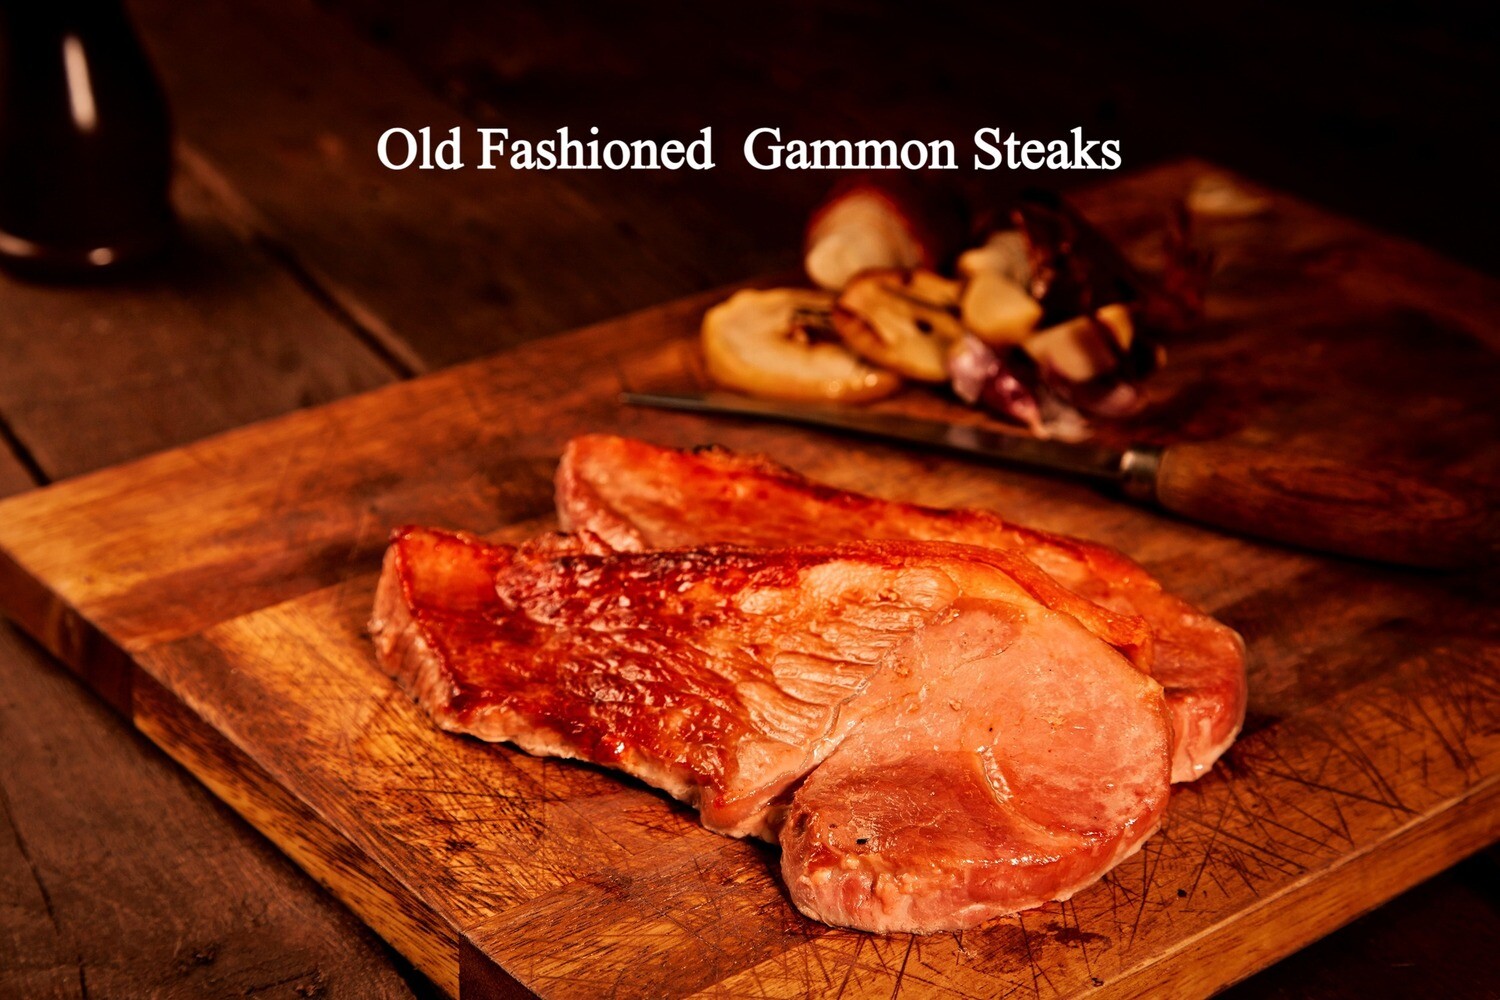 Old Fashioned Gammon Steaks - FROZEN - Av. 7.50€ per 350gm pack of 2               
(22.00€ per kg)